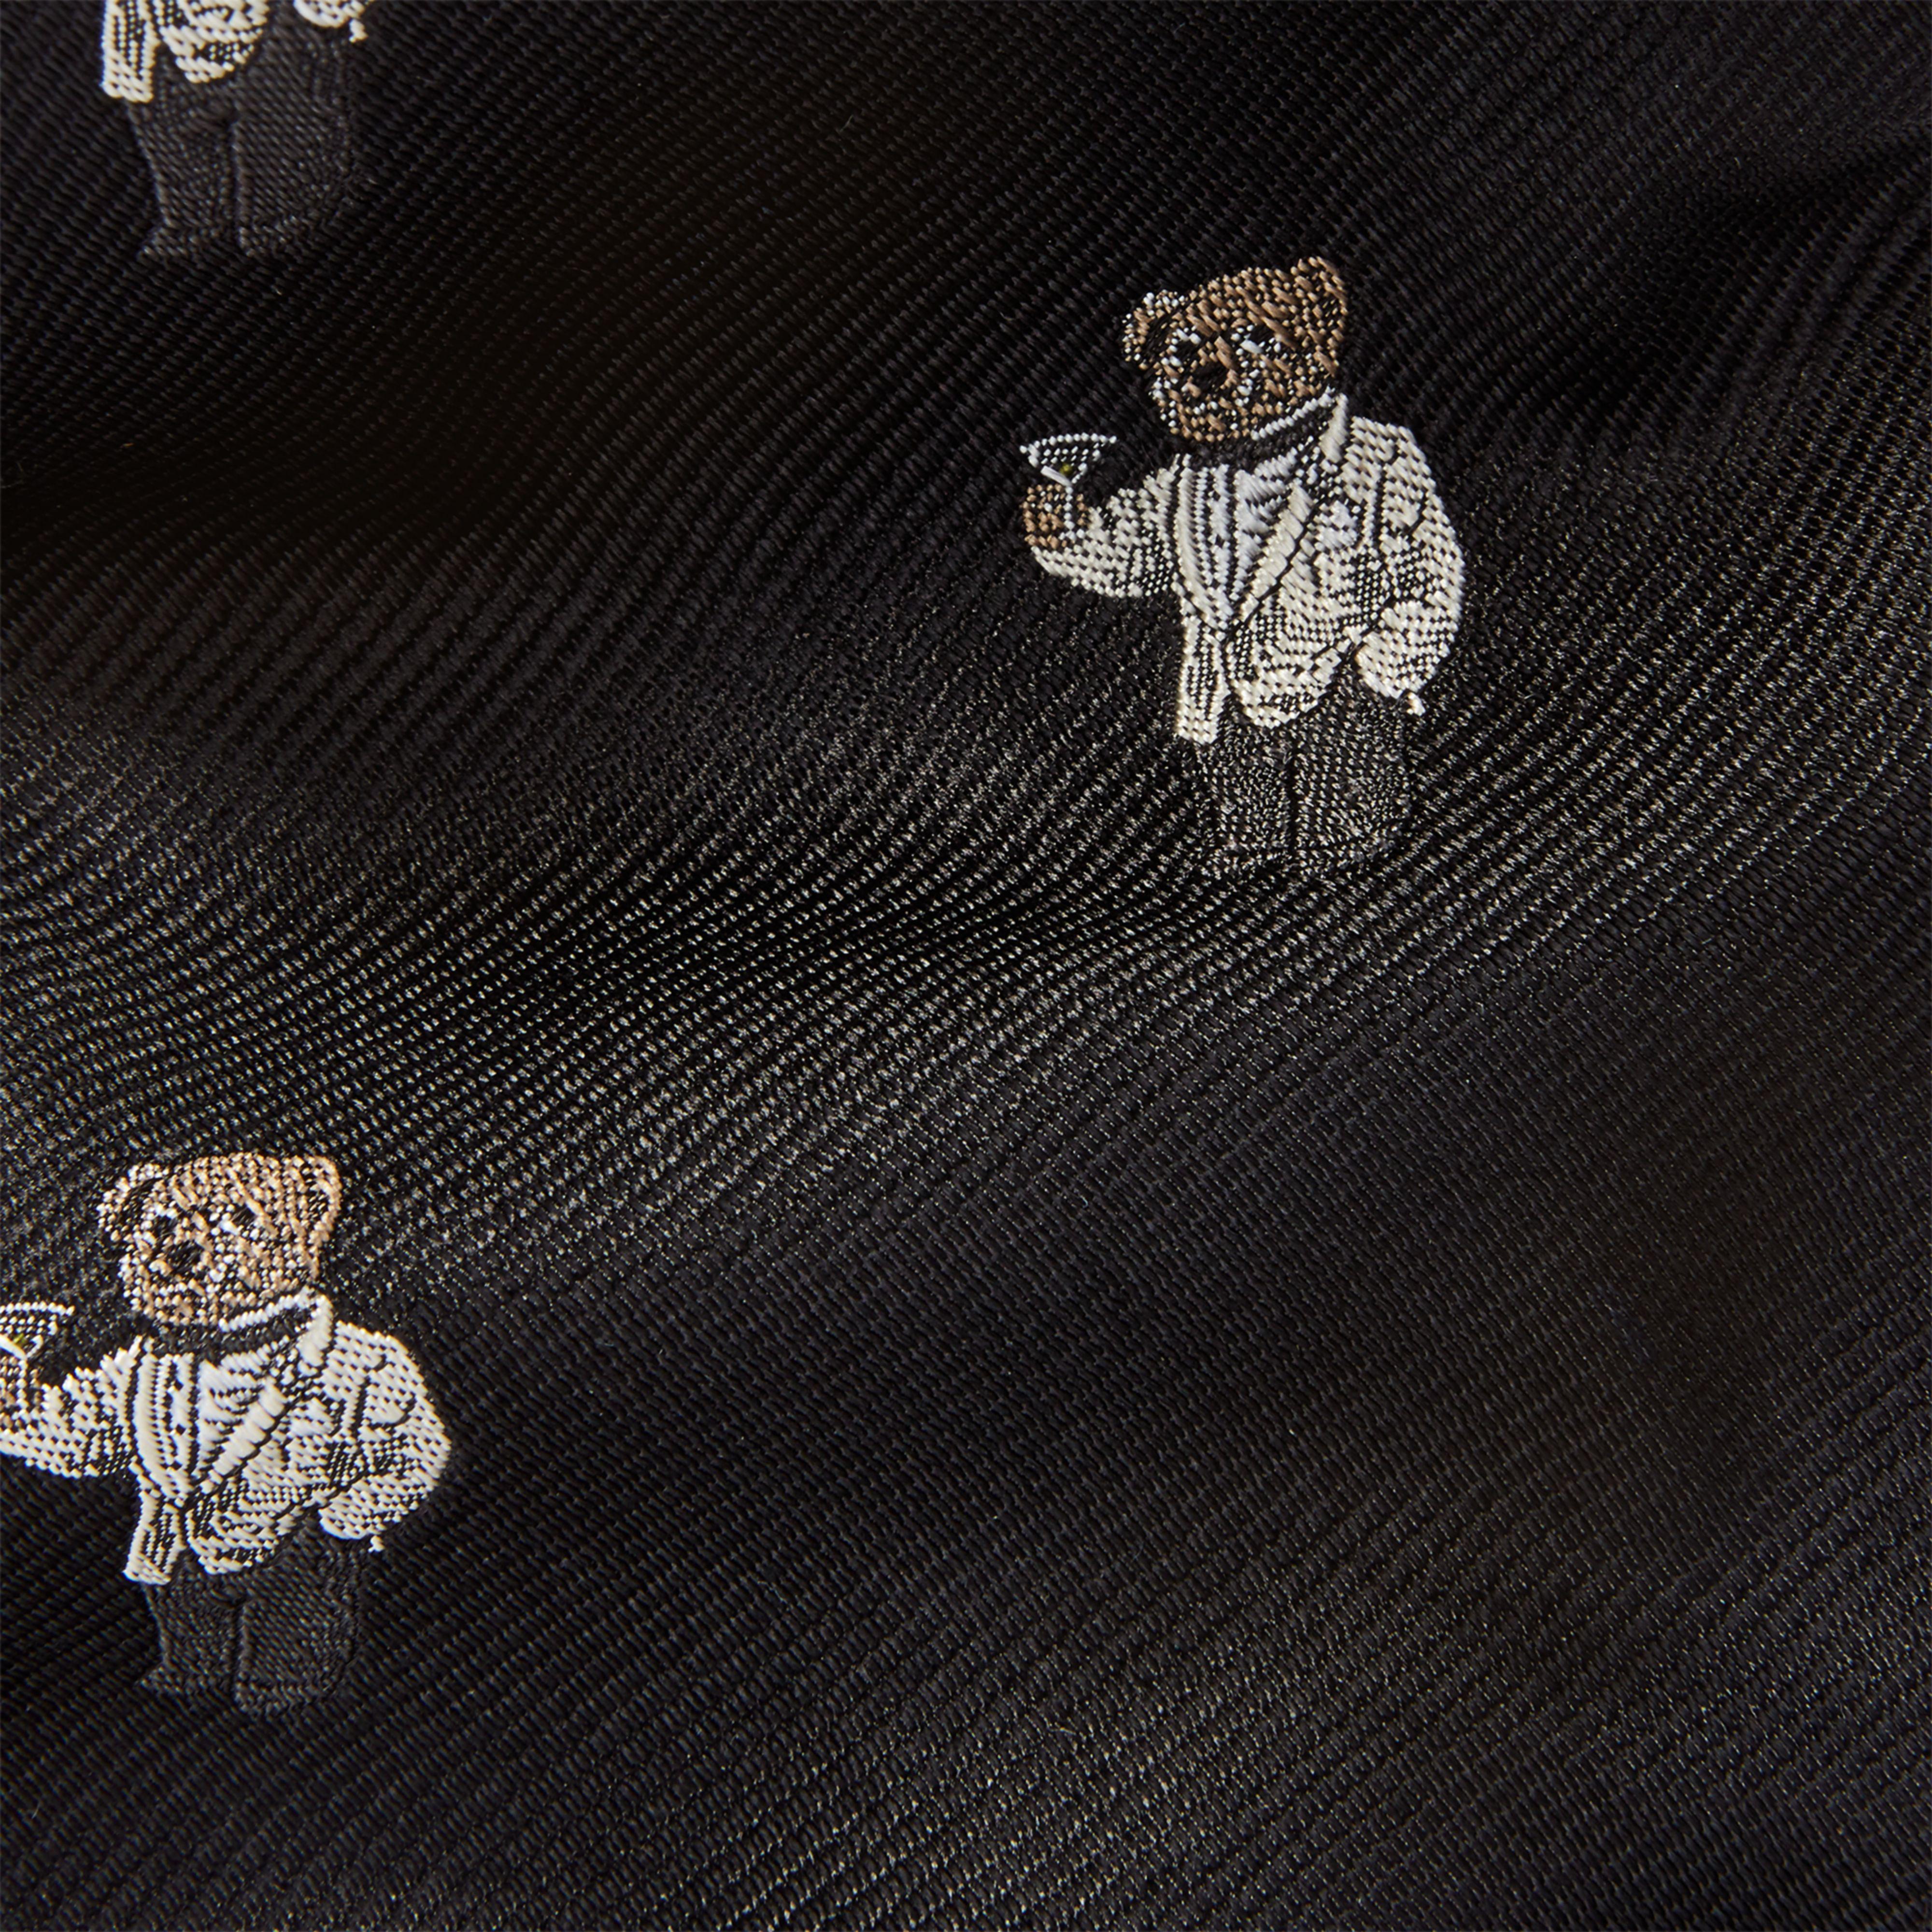 Polo Ralph Lauren Martini Bear Silk Narrow Tie in Black for Men - Lyst